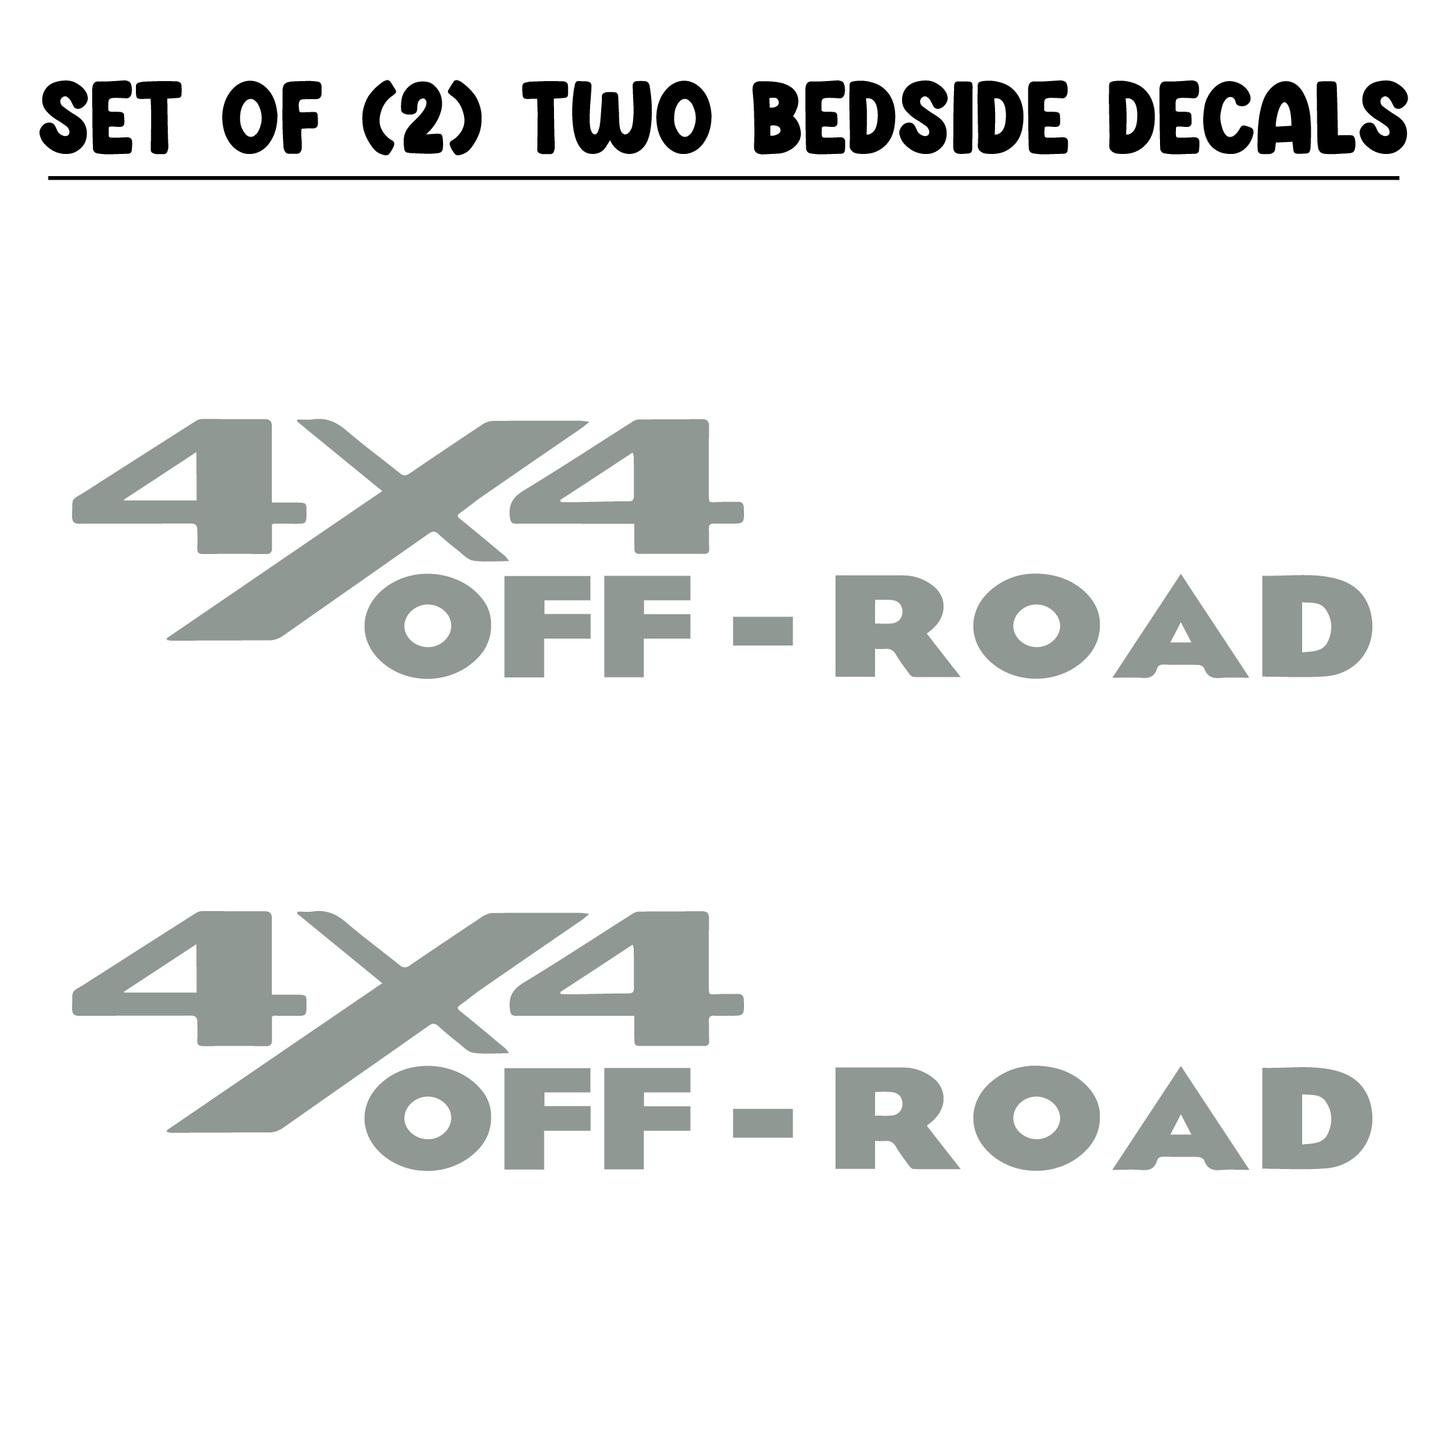 Shop Vinyl Design RAM Trucks 4 x 4 Off Road Replacement Bedside Decals #13 Vehicle 001 Grey Gloss Shop Vinyl Design decals stickers